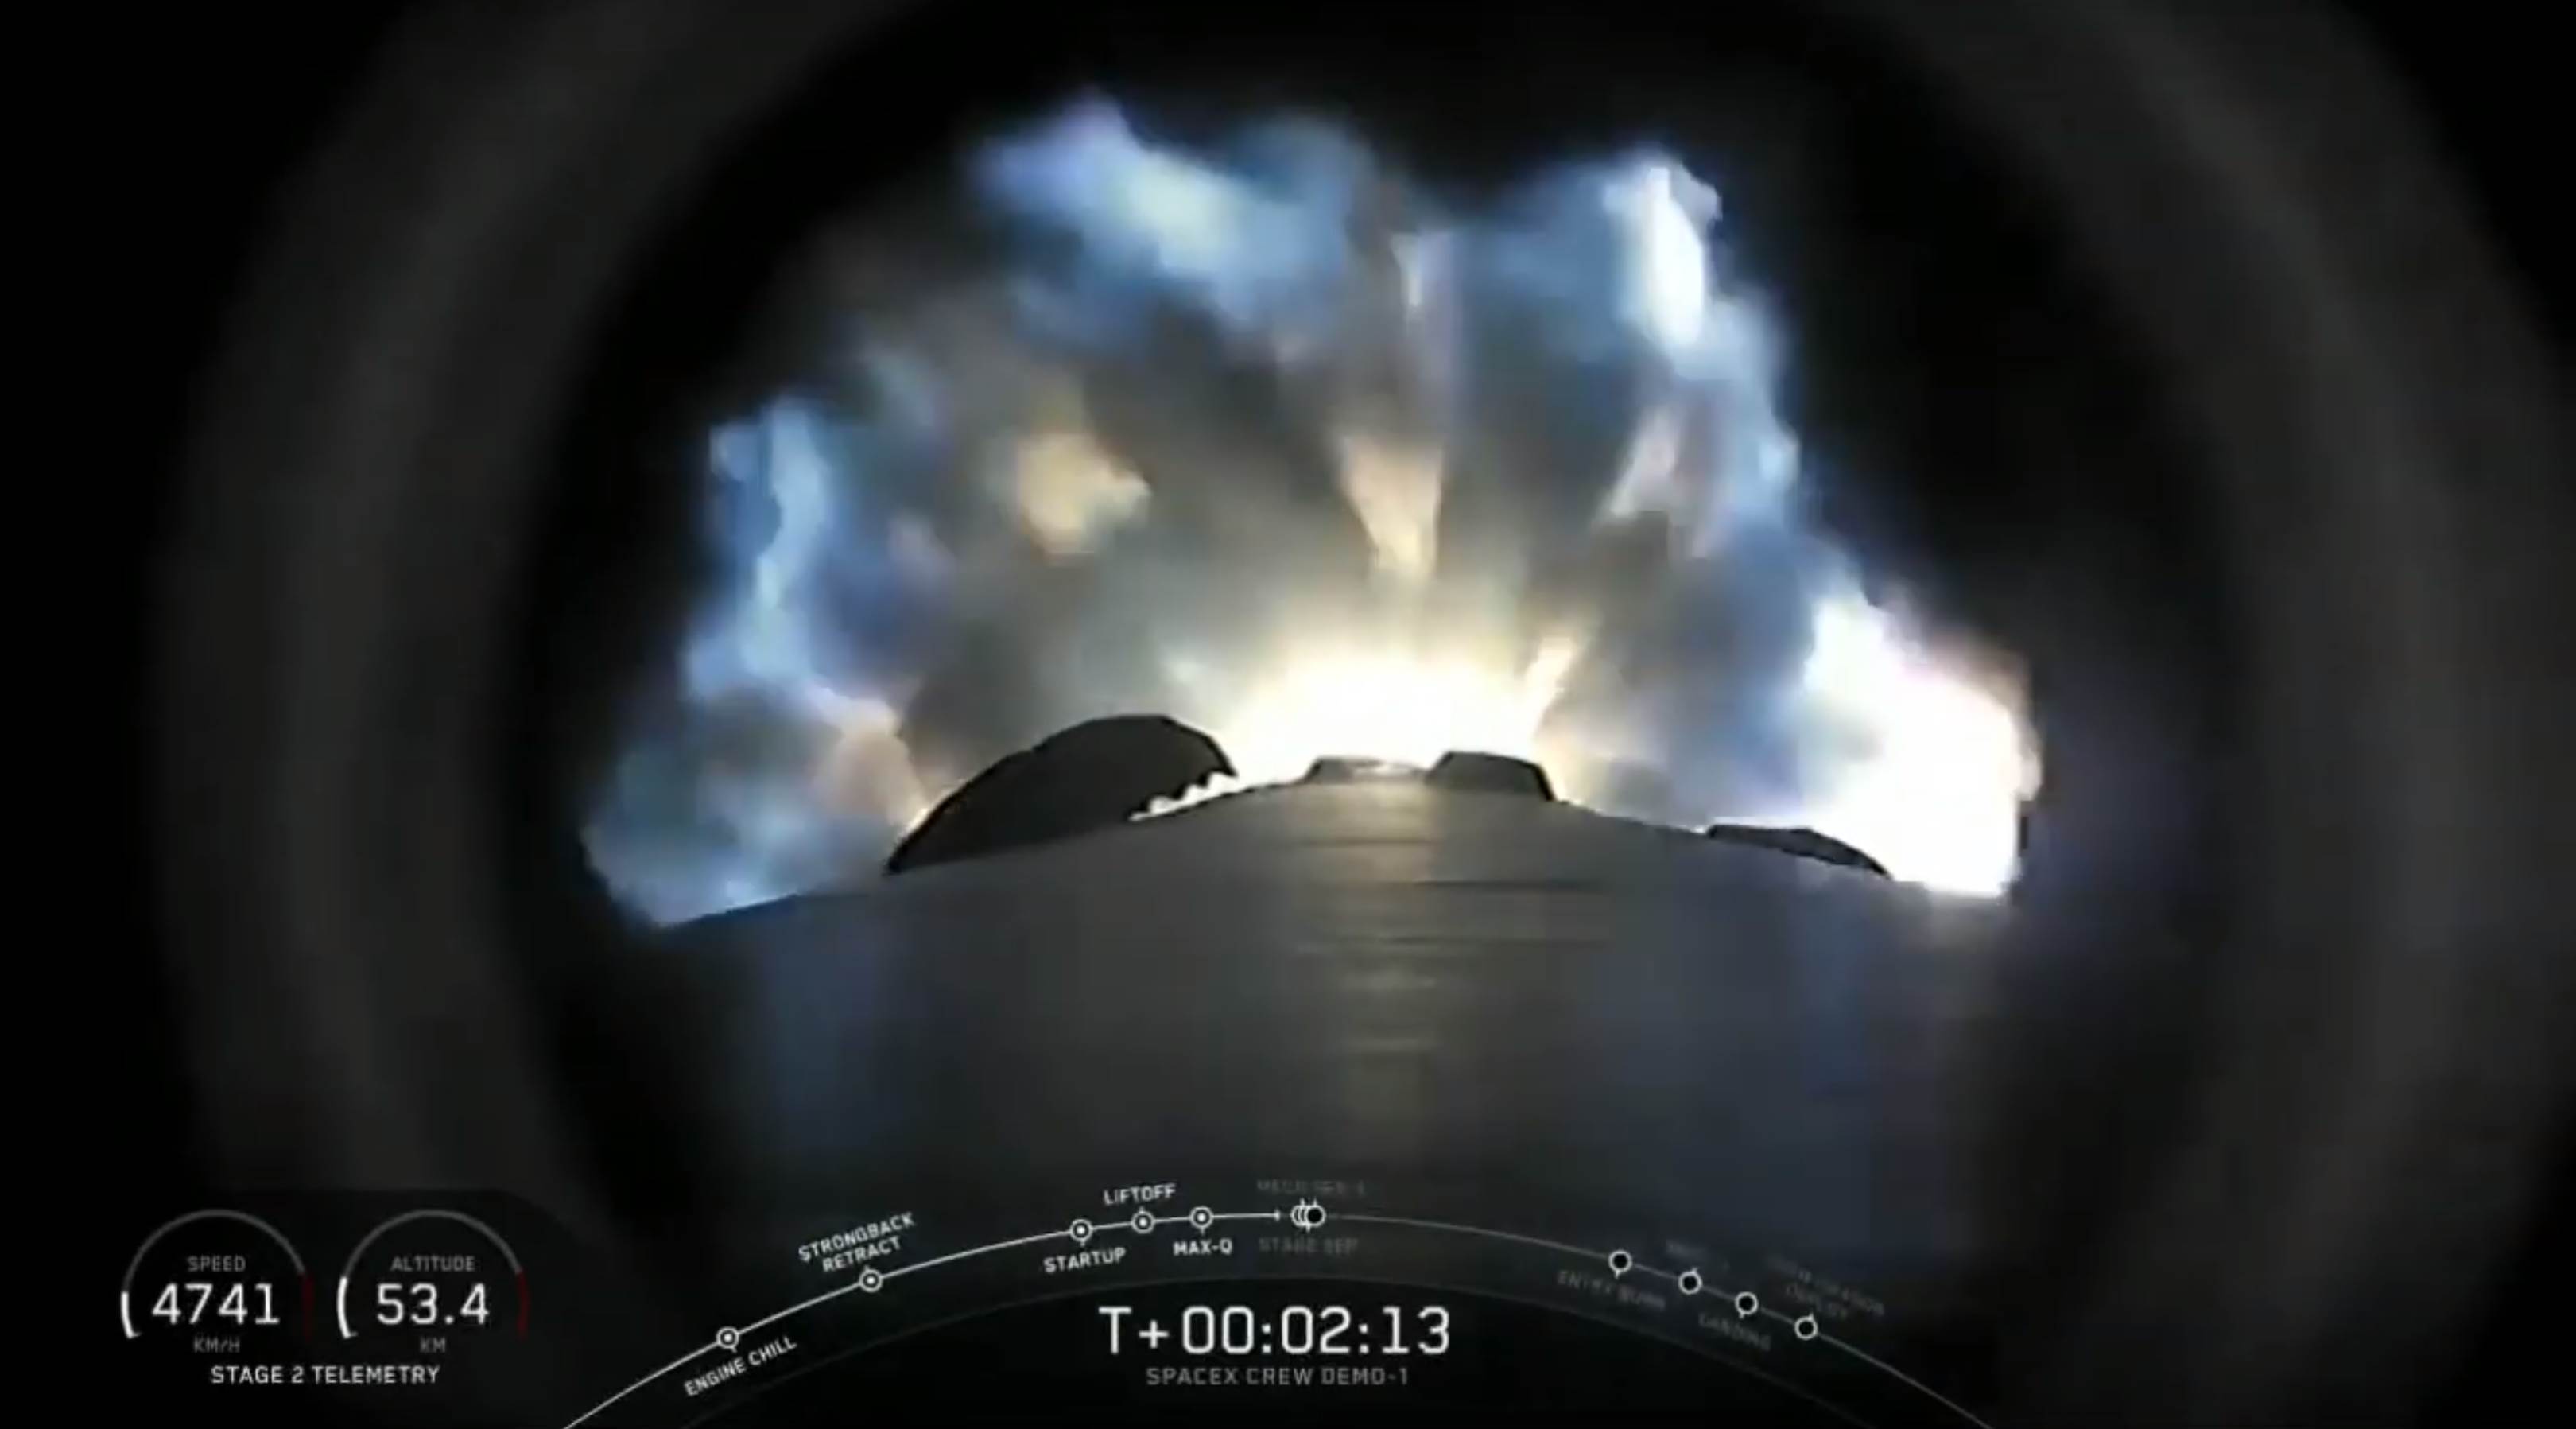 DM-1 Crew Dragon Falcon 9 B1051 launch (SpaceX) webcast 5